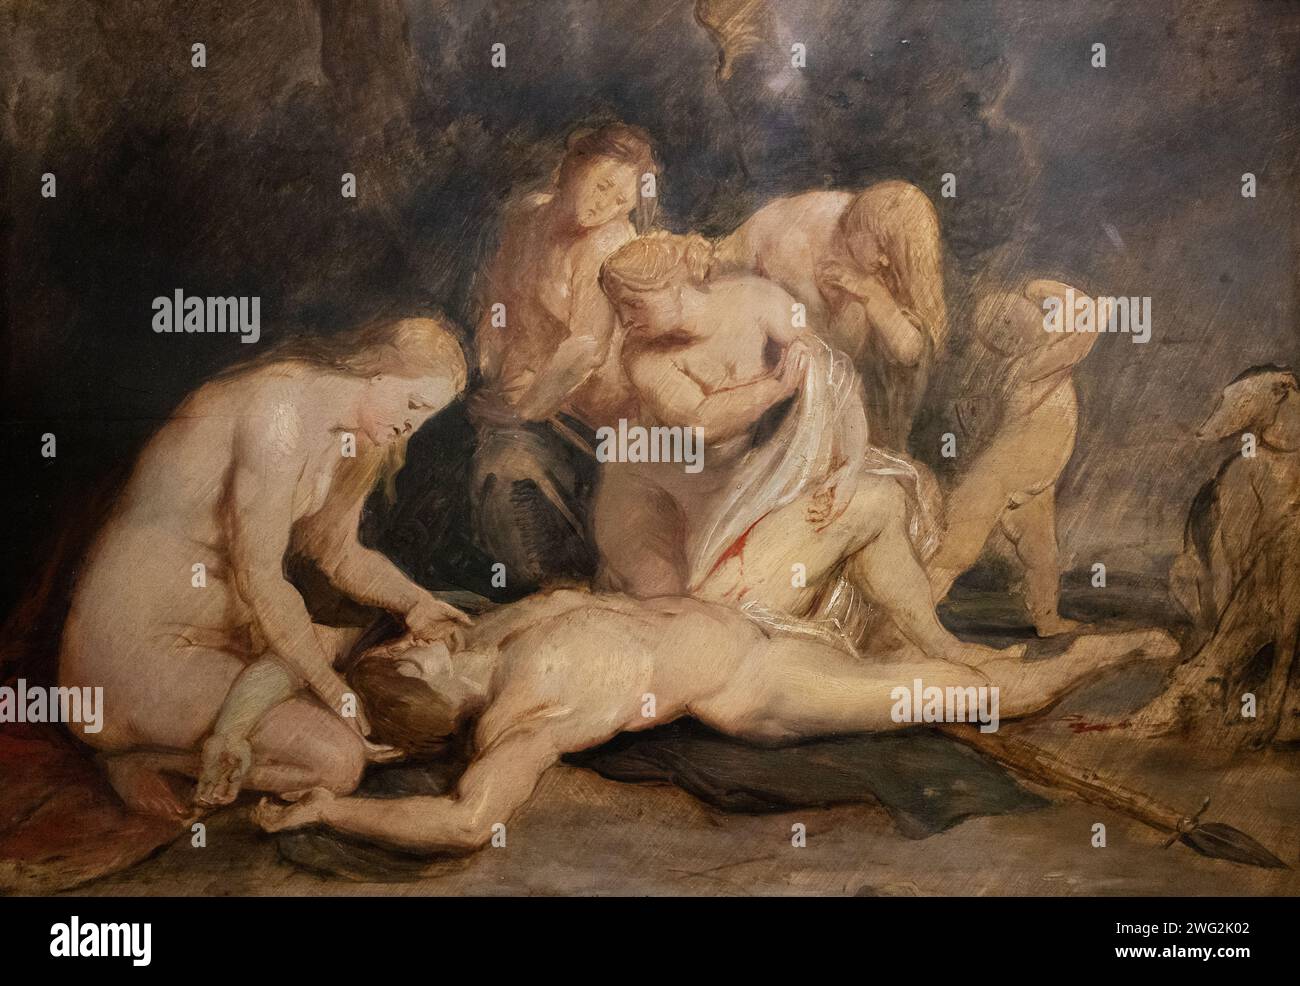 Peter Paul Rubens painting, 'Venus mourning Adonis', 1613-15; oil on panel, Venus cradling Adonis, wounded while hunting. 17th century mythology . Stock Photo